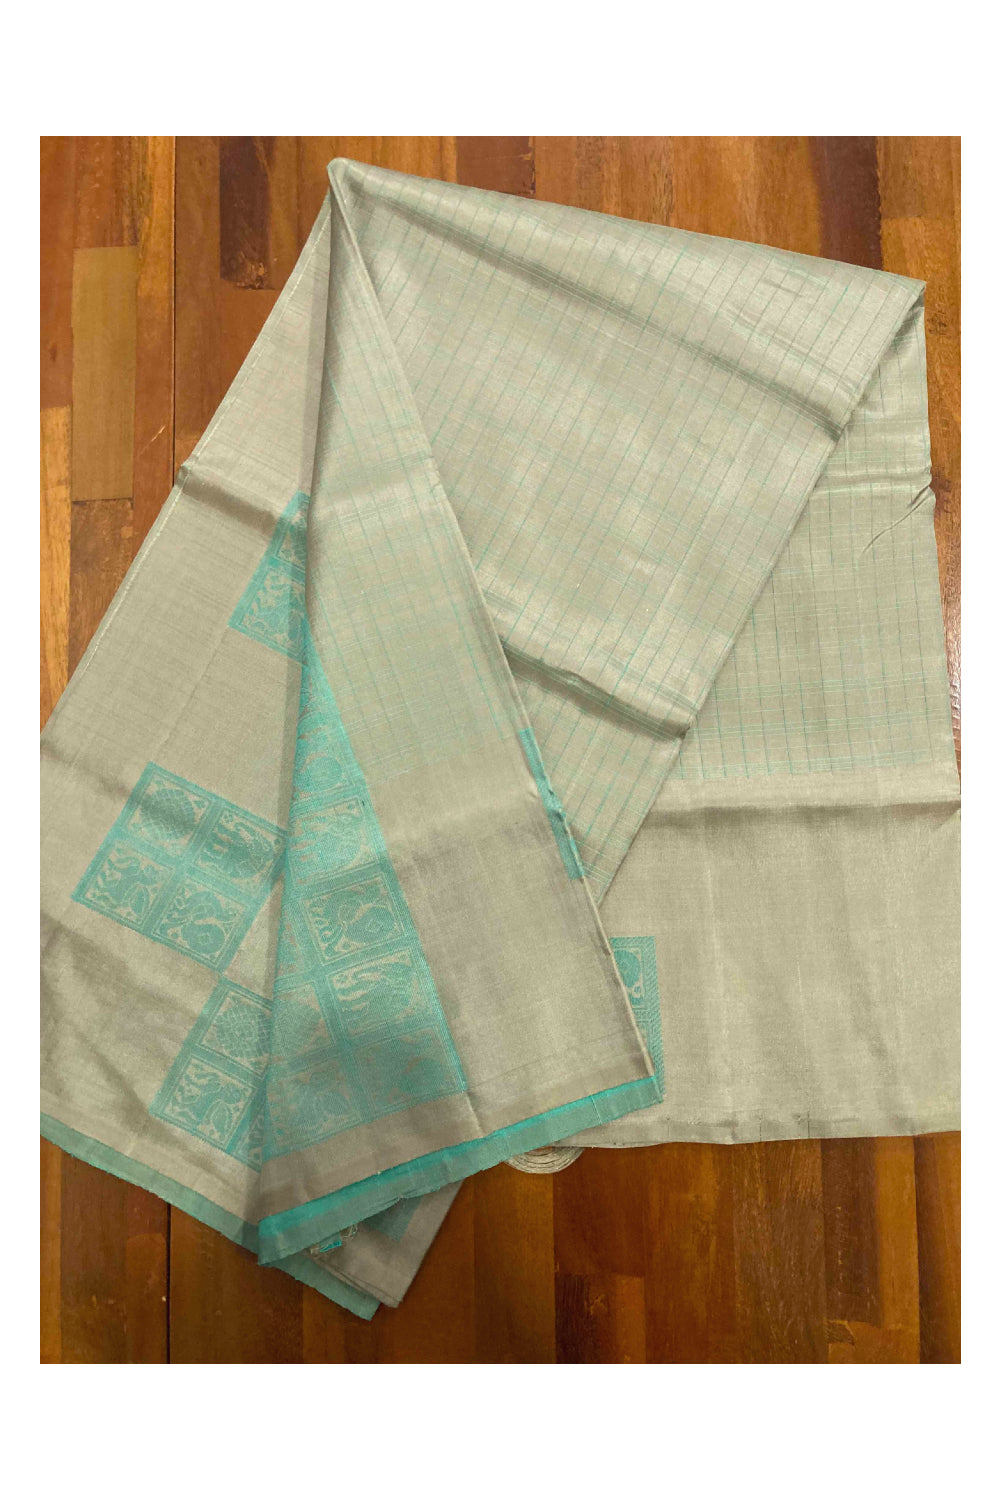 Southloom Handloom Pure Silk Kanchipuram Saree in Grey Checkered and Turquoise Elephant Motifs